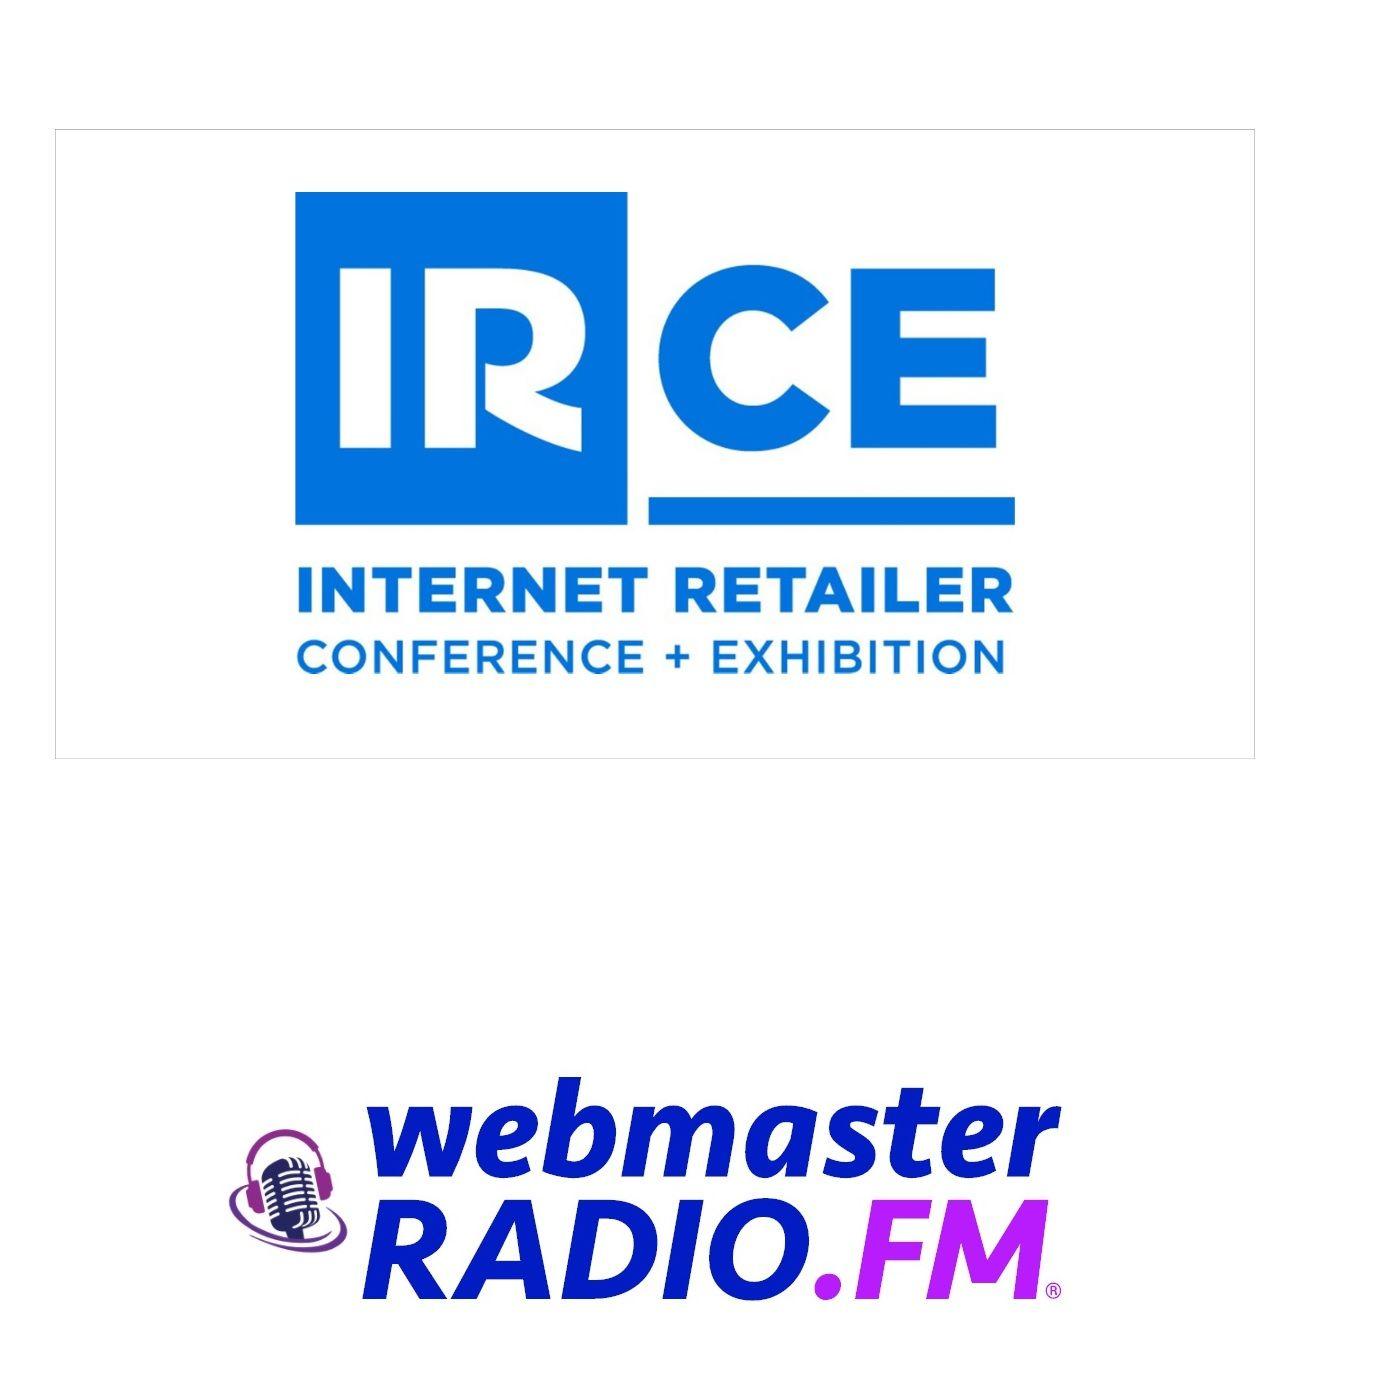 Internet Retailer Conference